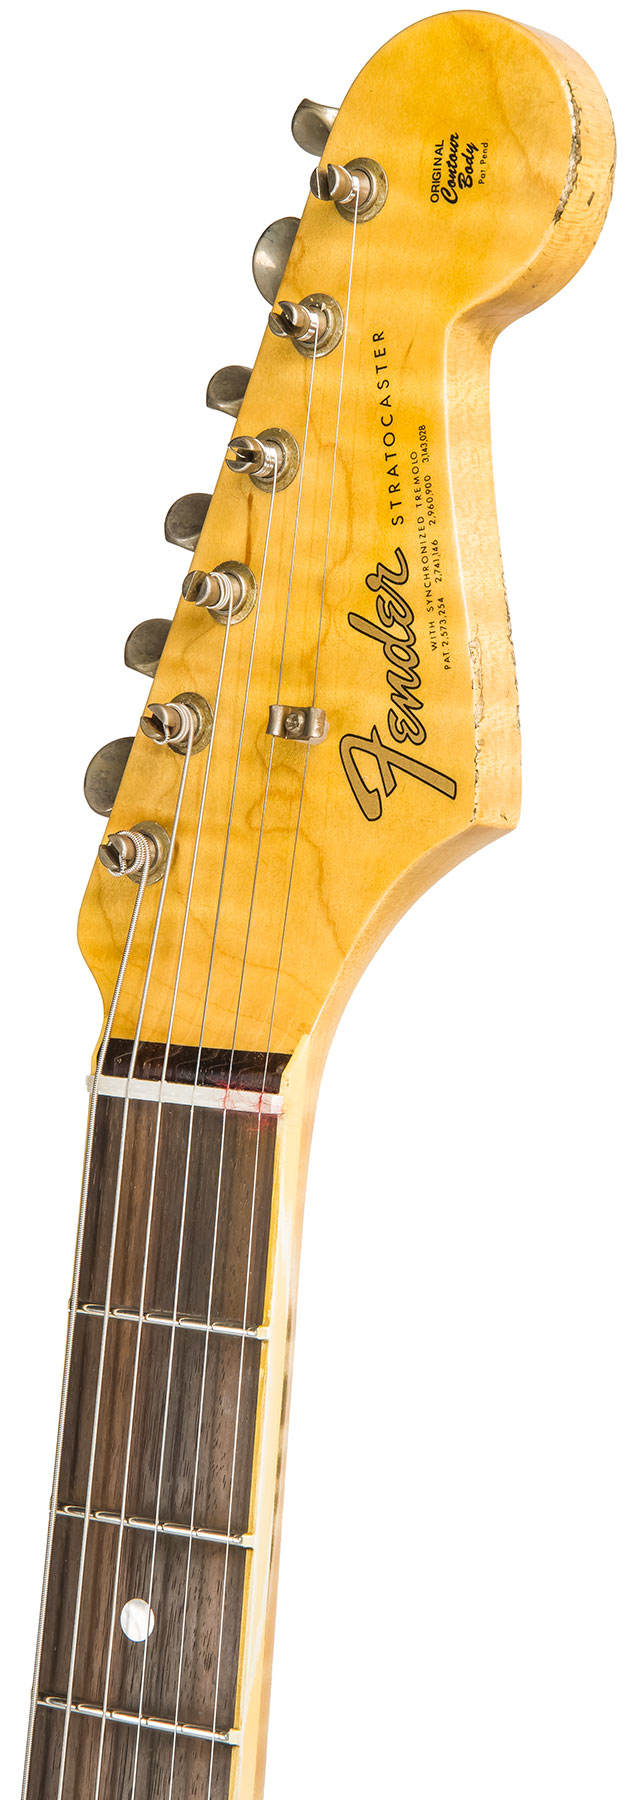 Fender Custom Shop Strat 1965 Ltd Usa Rw #cz548544 - Relic Daphne Blue Sparkle - Guitarra eléctrica con forma de str. - Variation 5